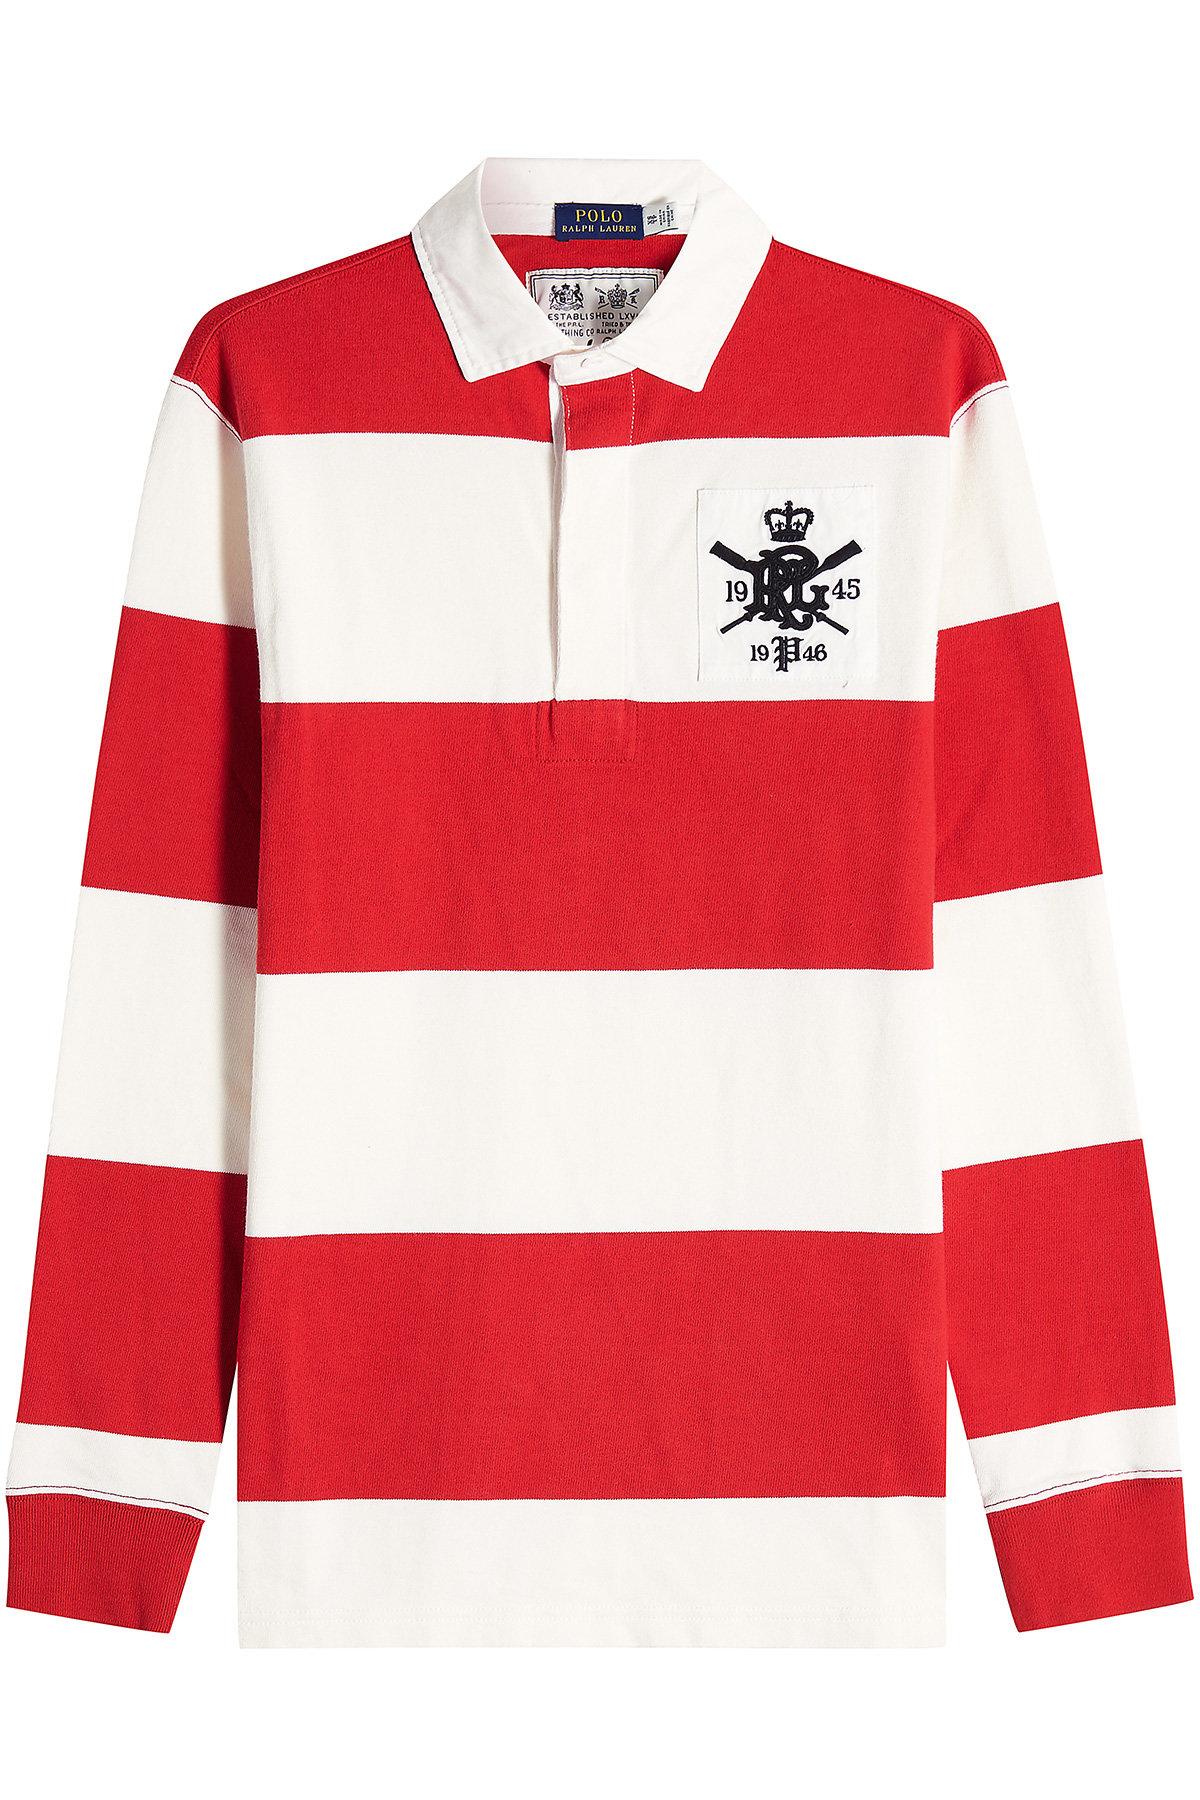 rugby ralph lauren shirts & tops,yasserchemicals.com